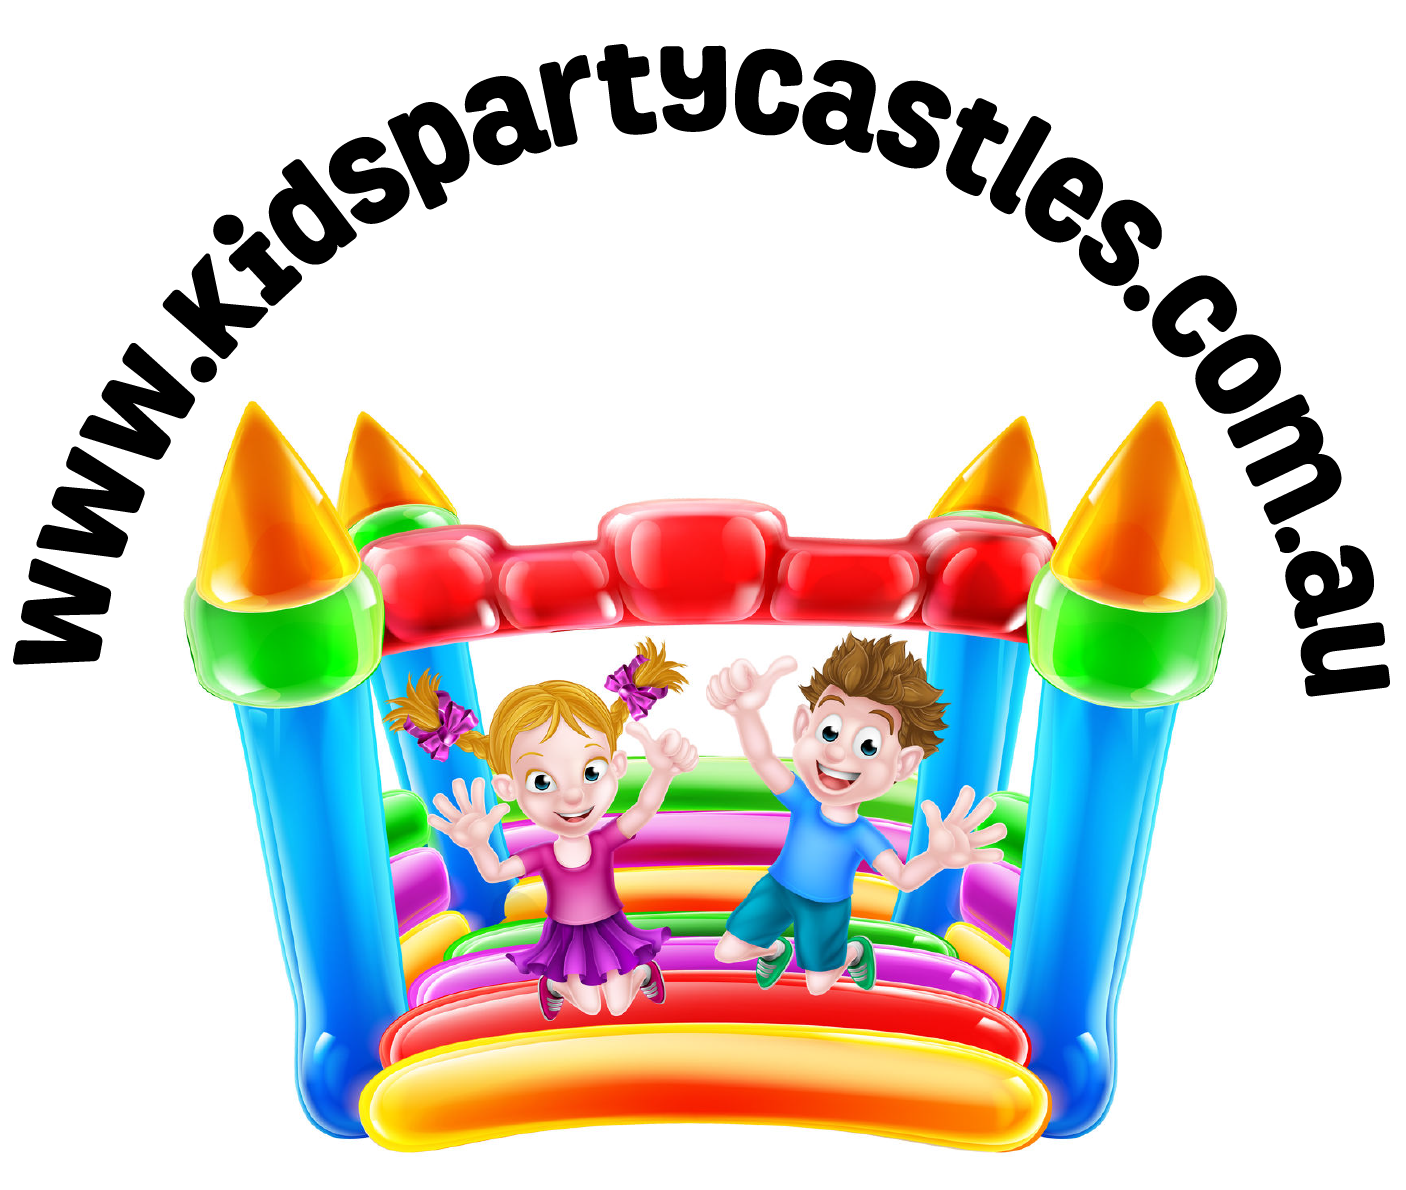 Kids Party Castles - Cartoon Bouncy Castle (1405x1201)